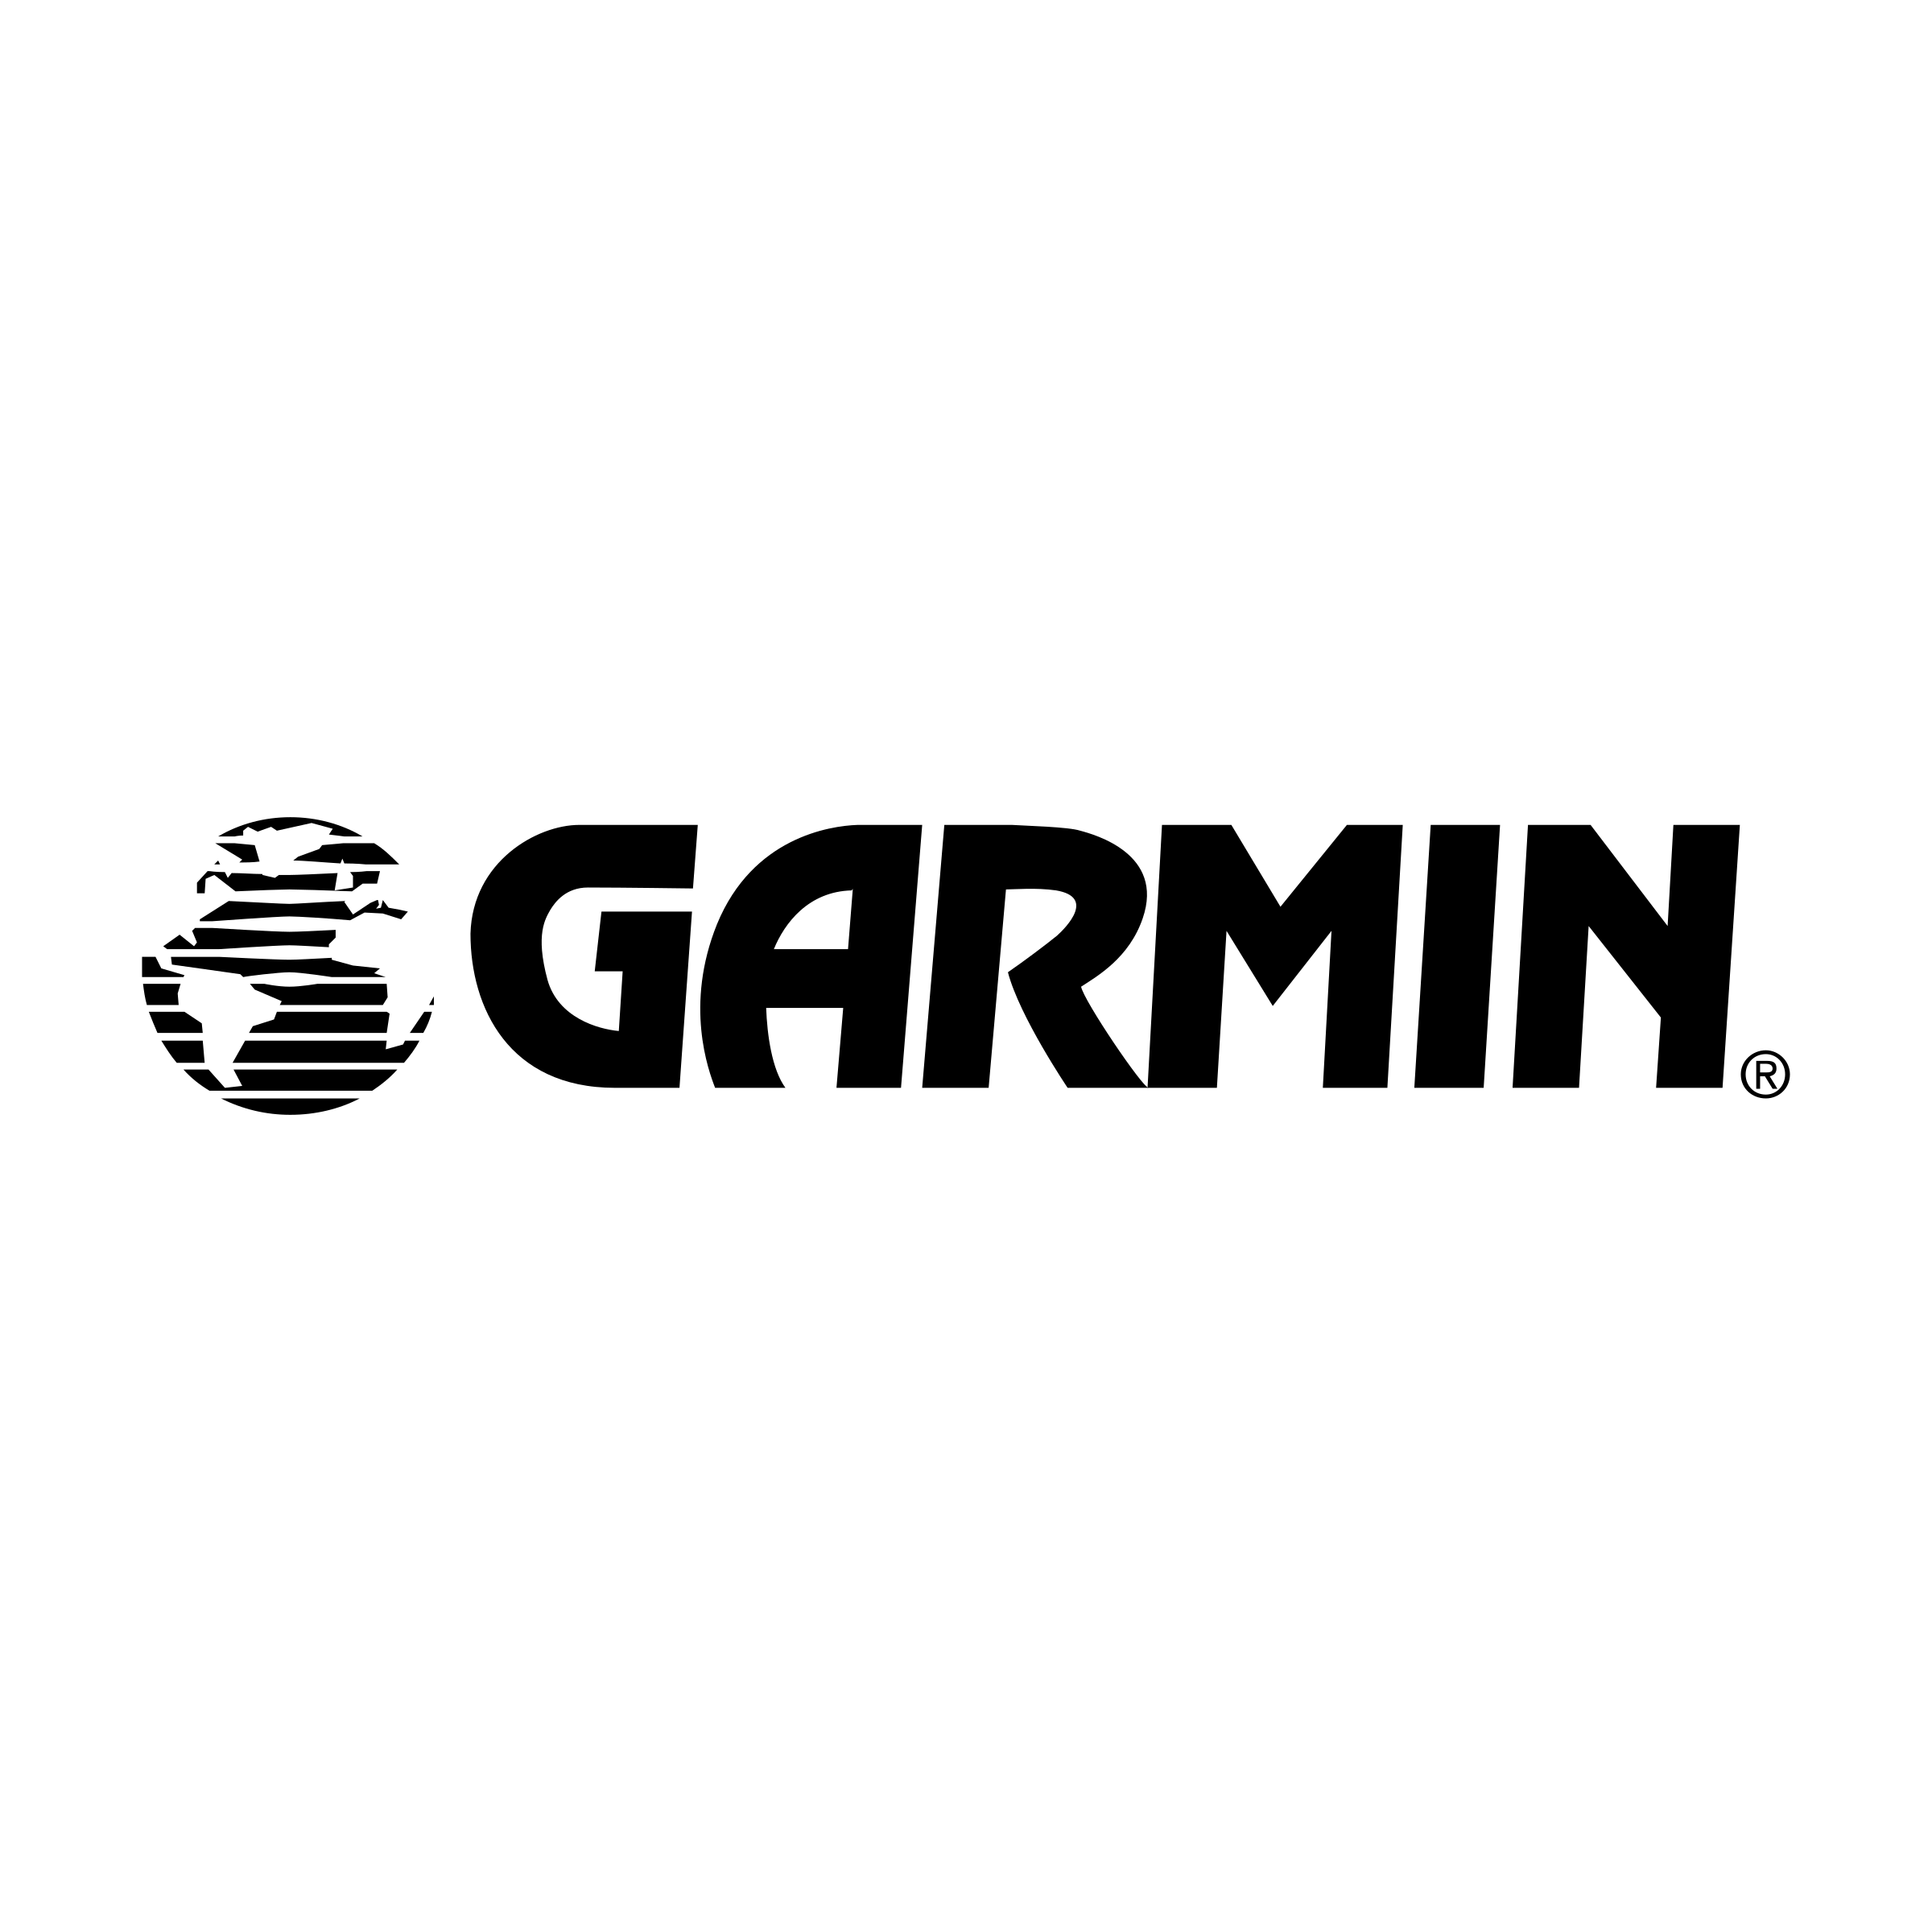 Garmin Logo - Garmin Logo PNG Transparent & SVG Vector - Freebie Supply